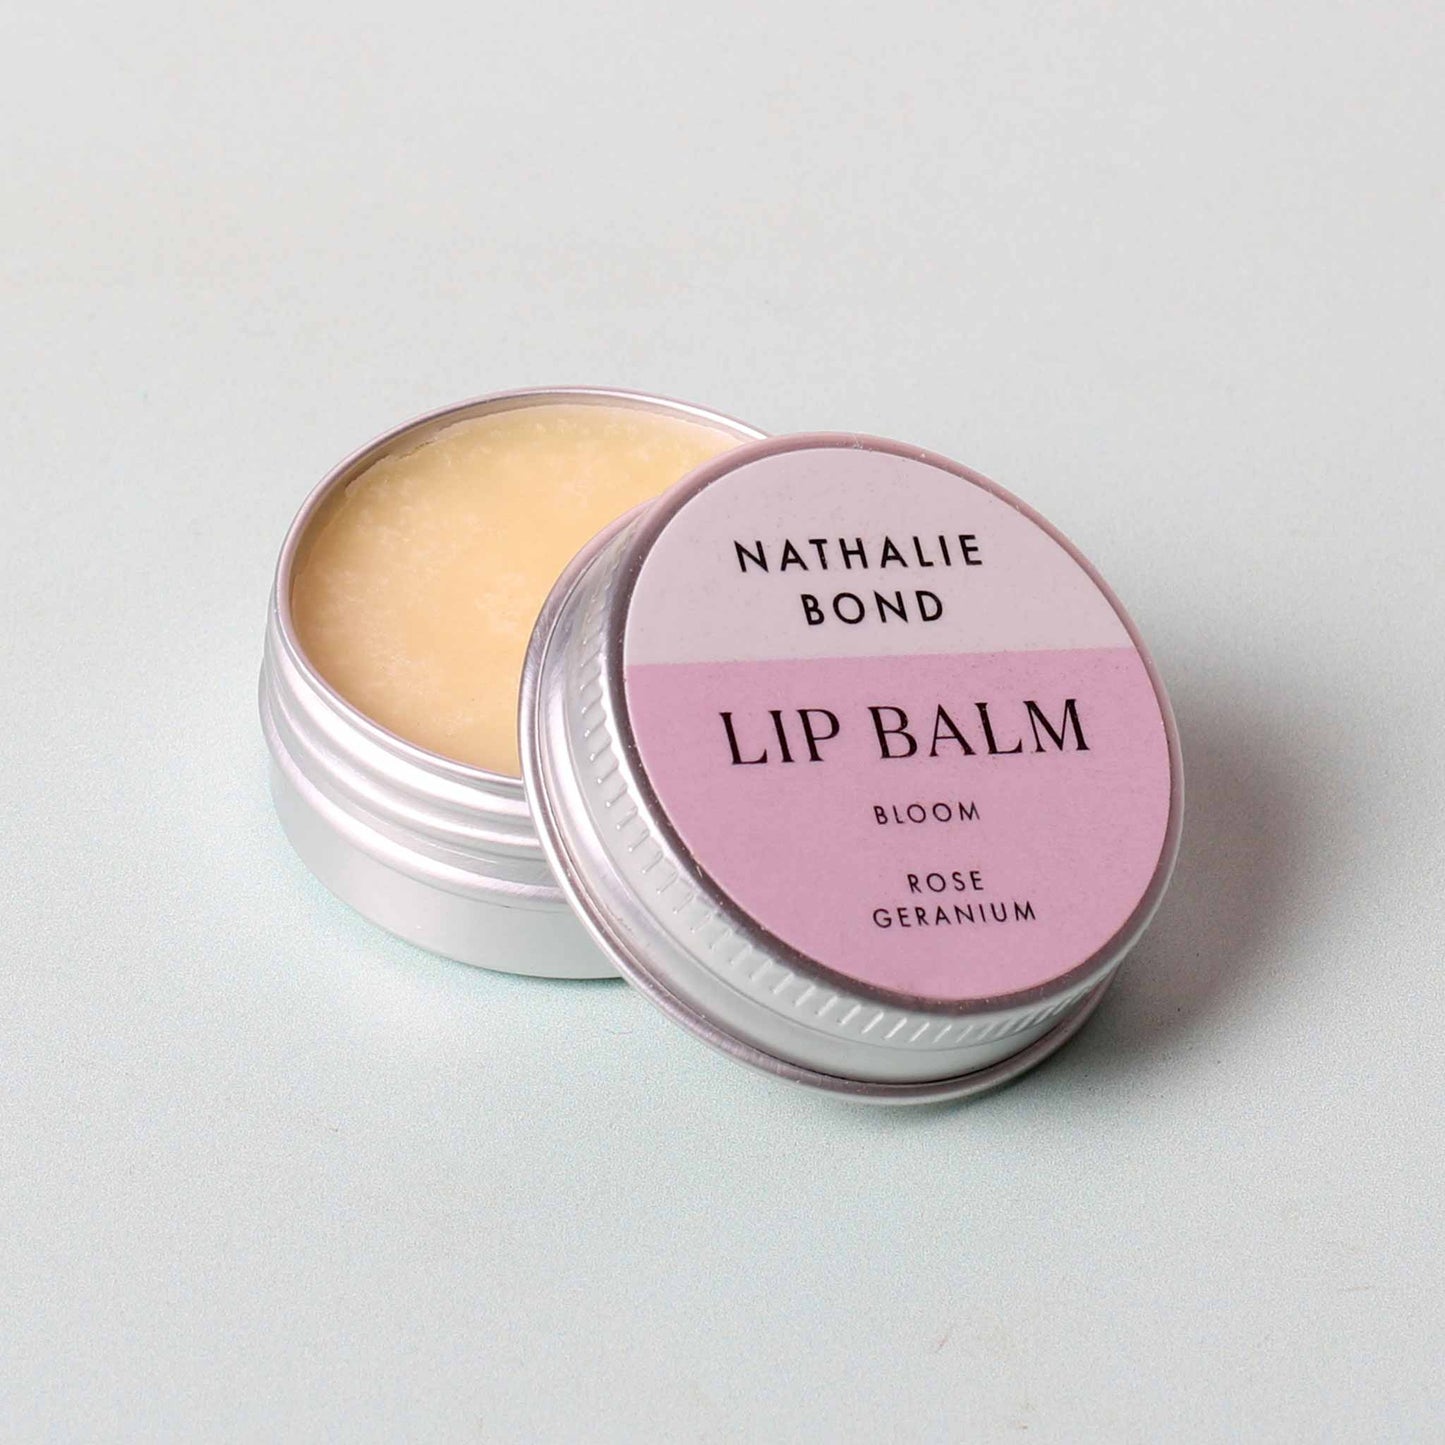 Nathalie Bond - Bloom Lip Balm 13g